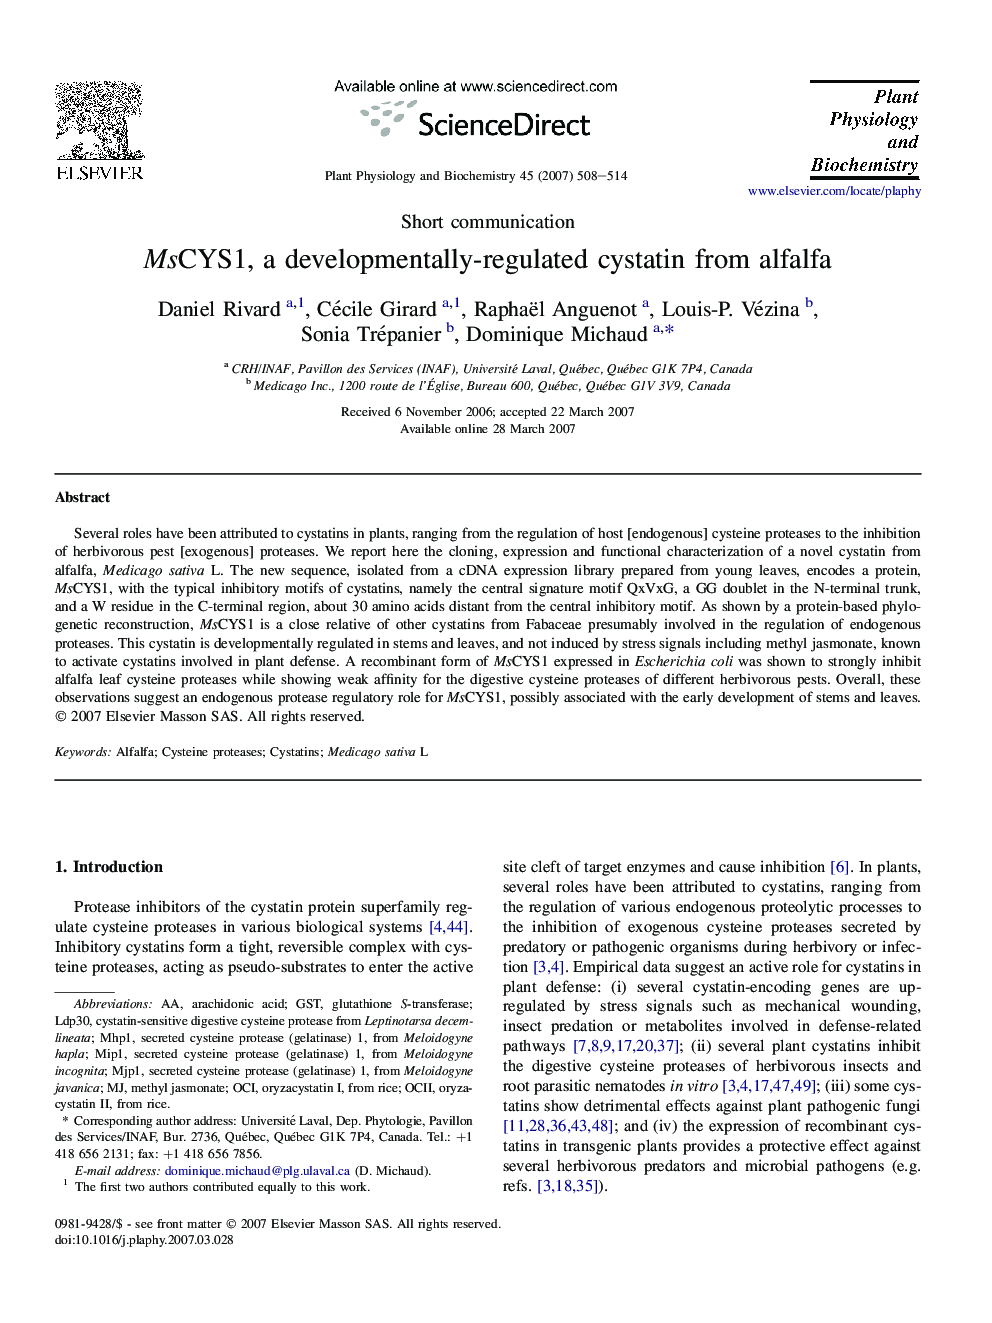 MsCYS1, a developmentally-regulated cystatin from alfalfa